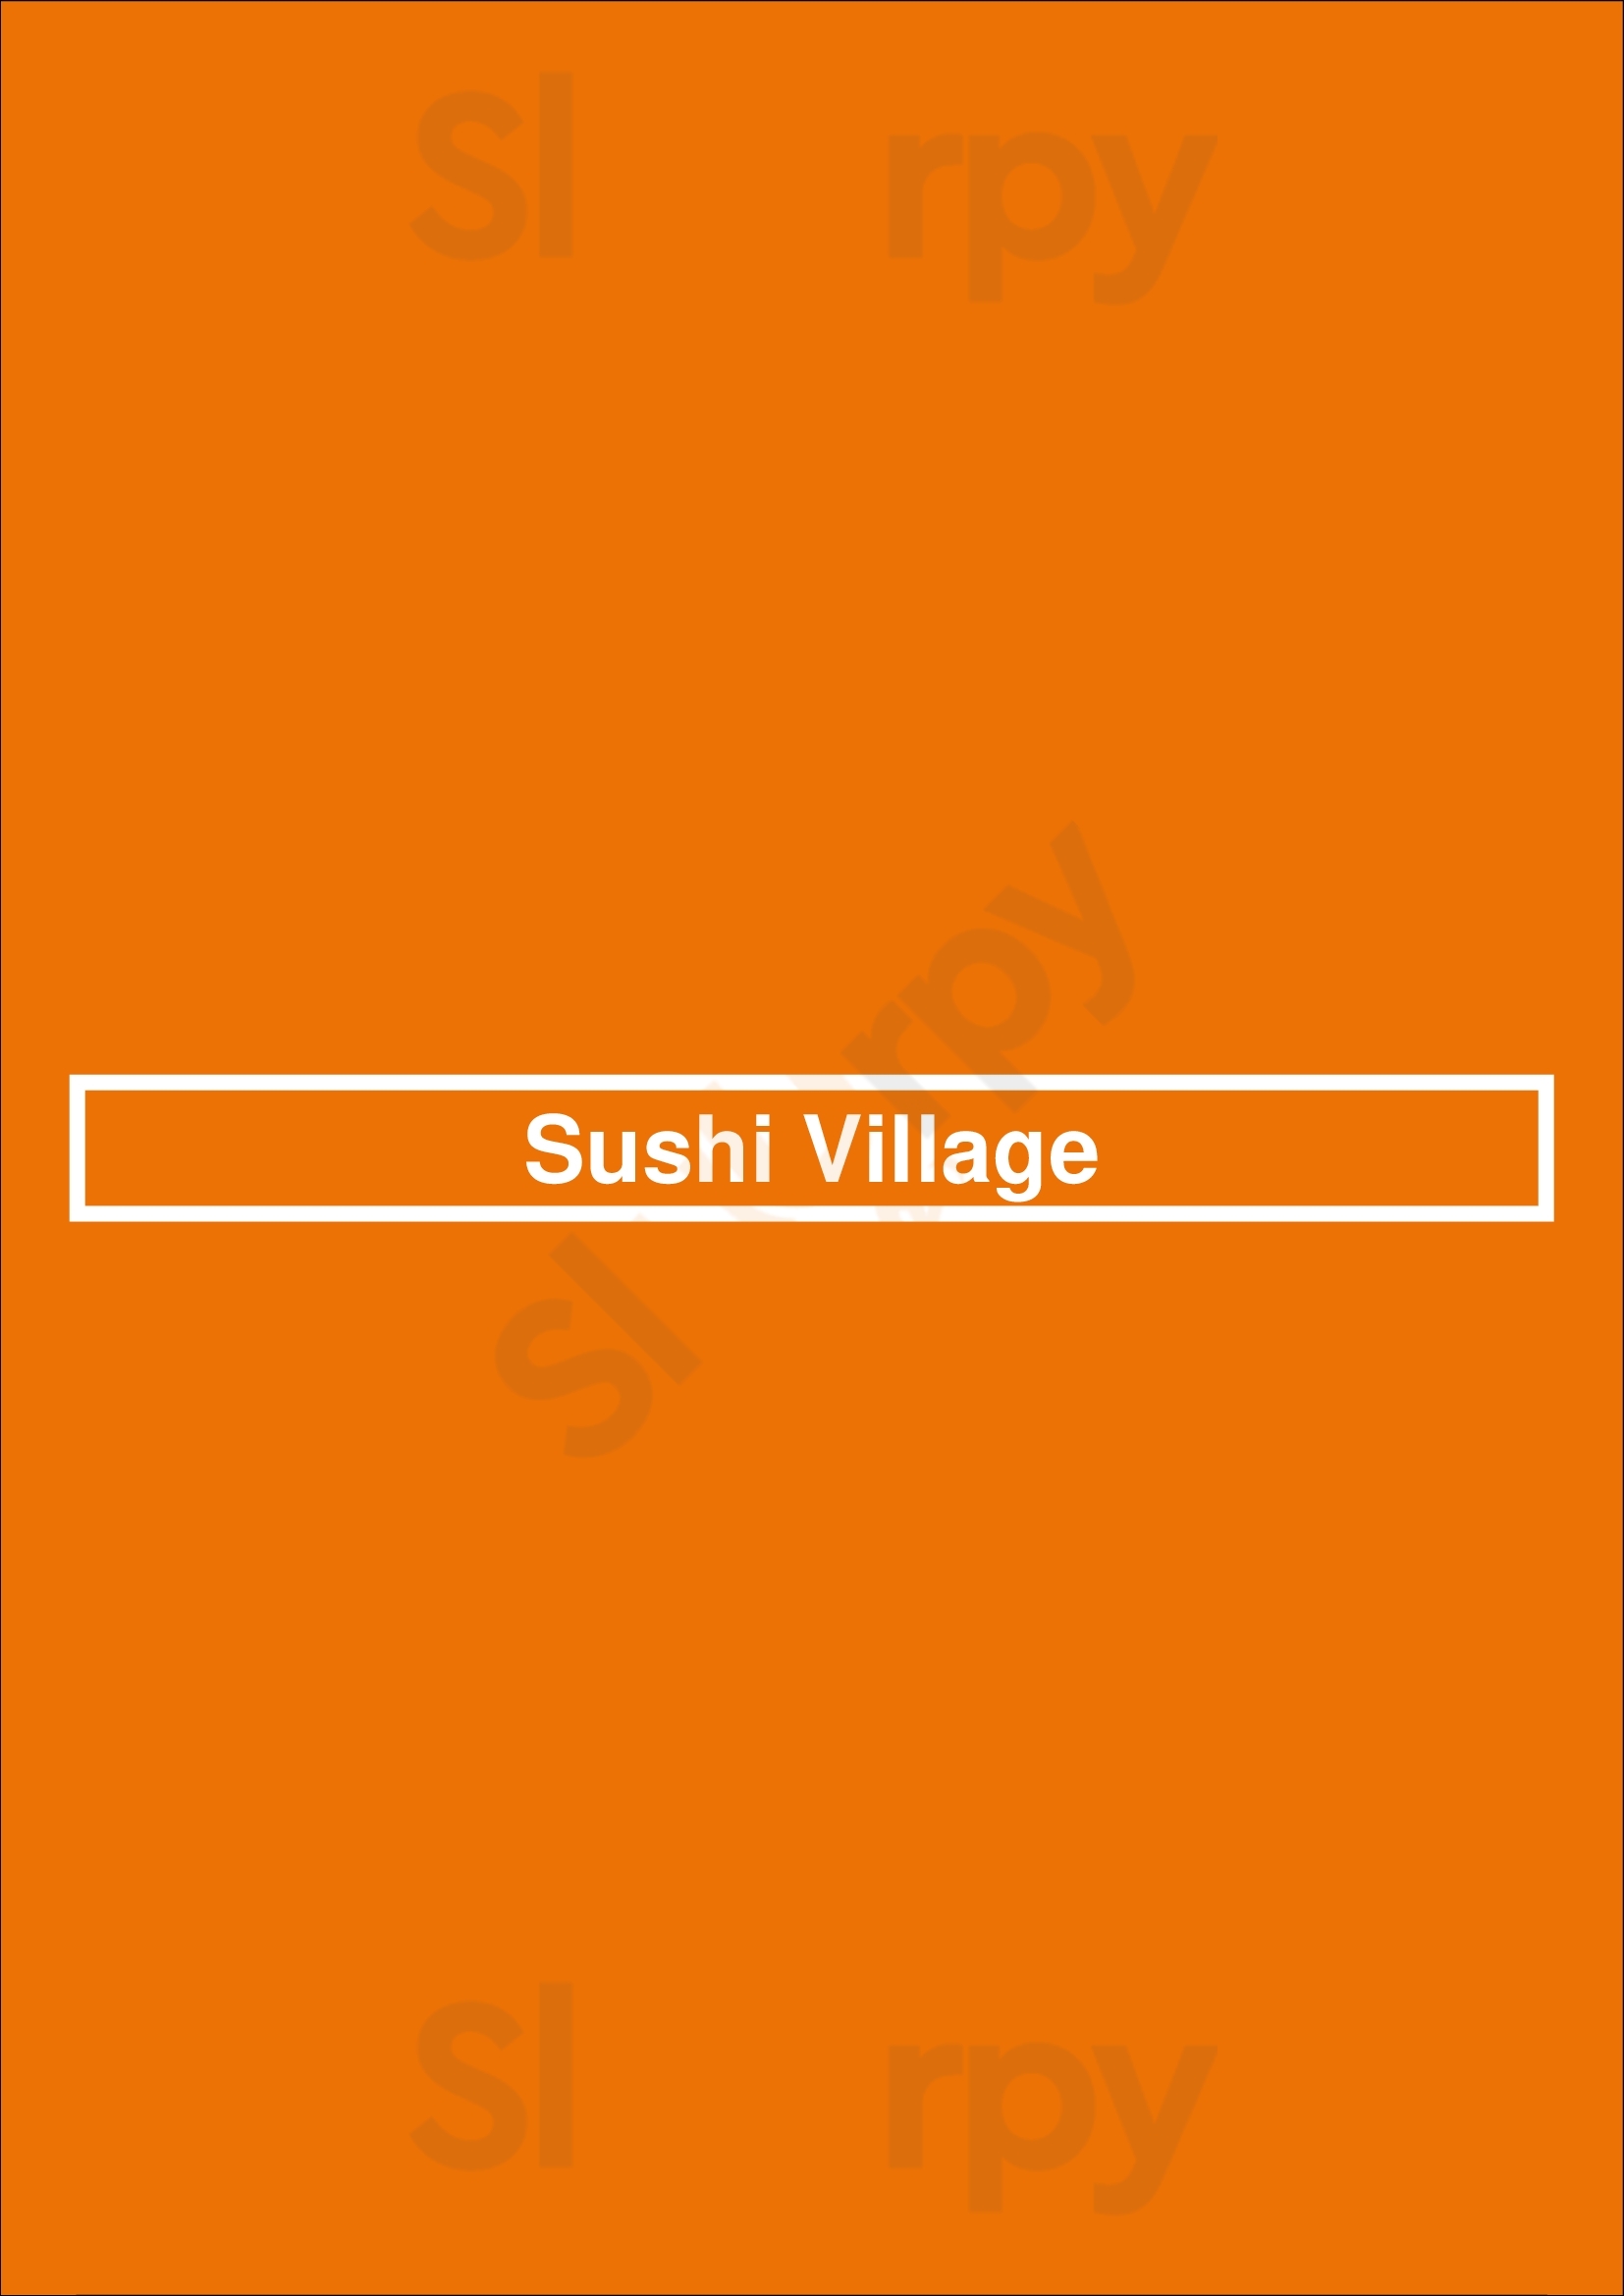 Sushi Village Birmingham Menu - 1